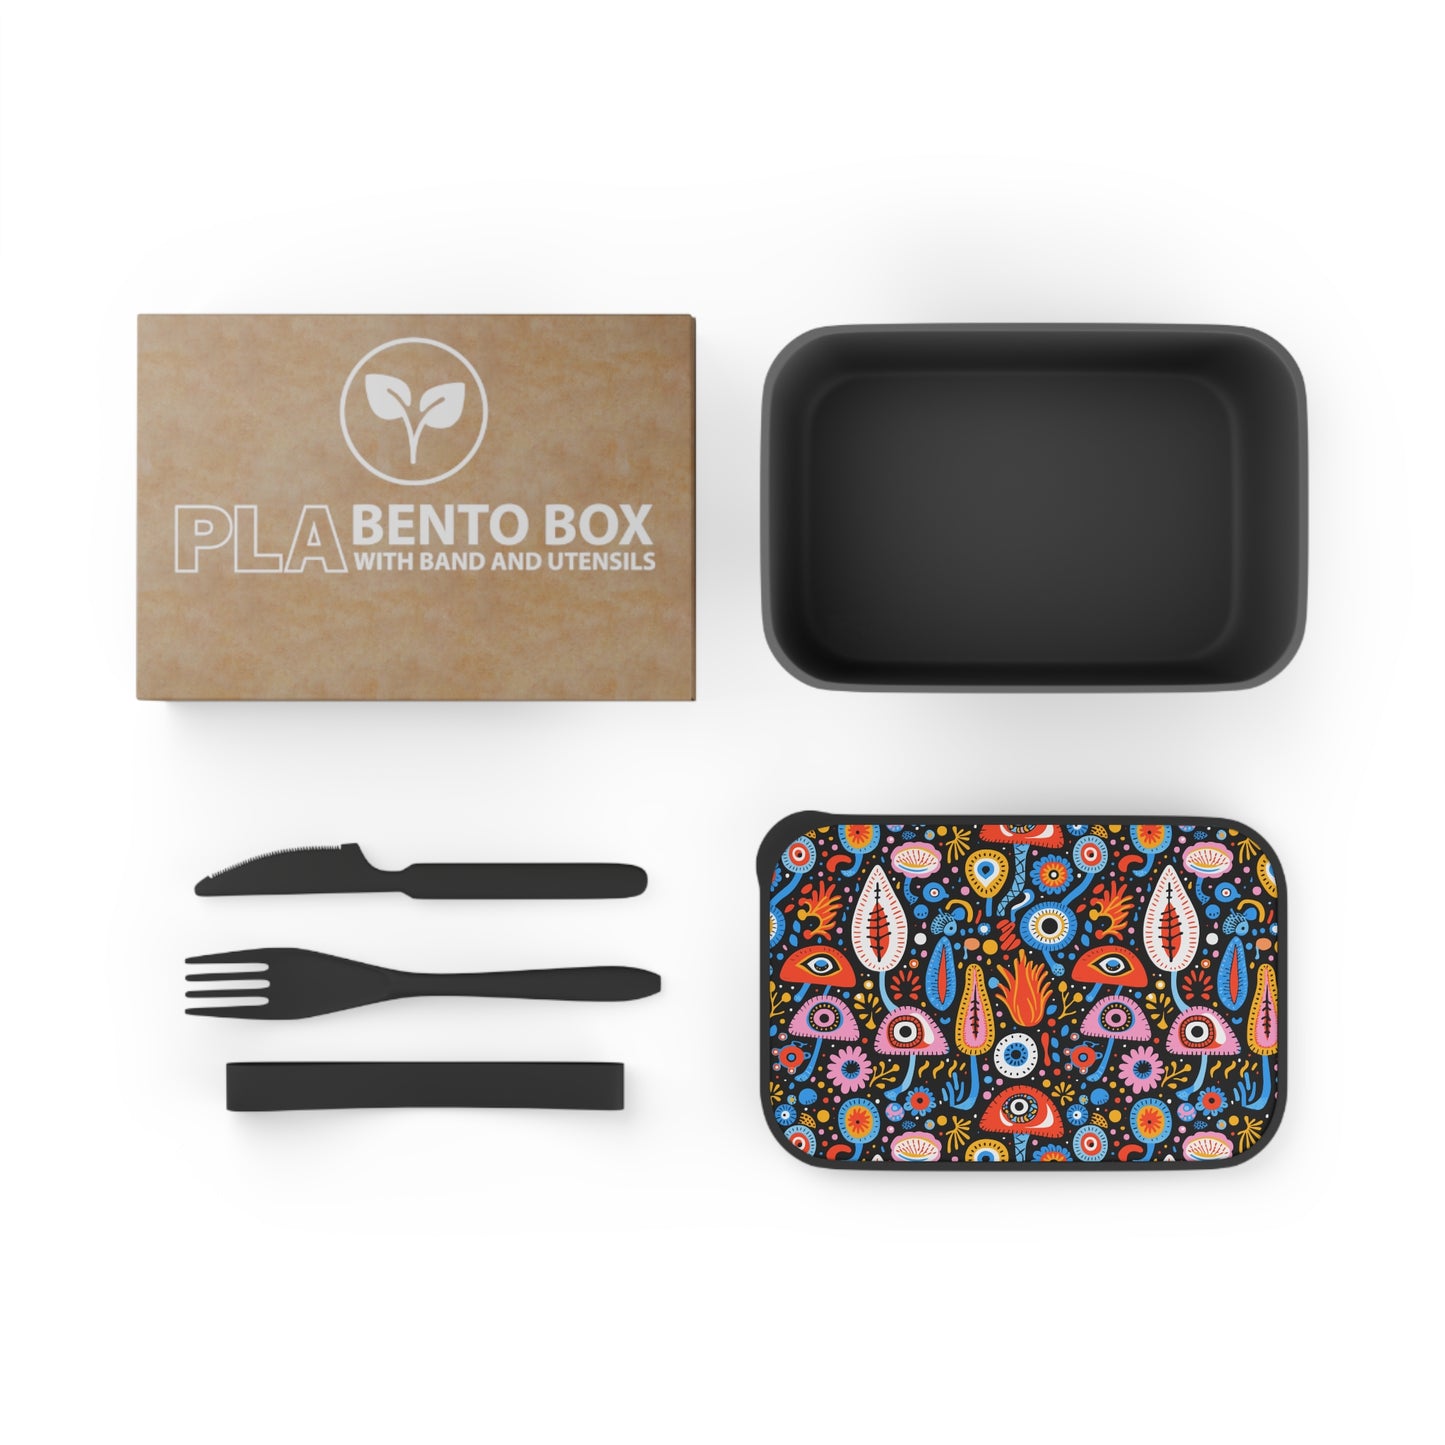 Sammlerin PLA Bento Box with Band and Utensils